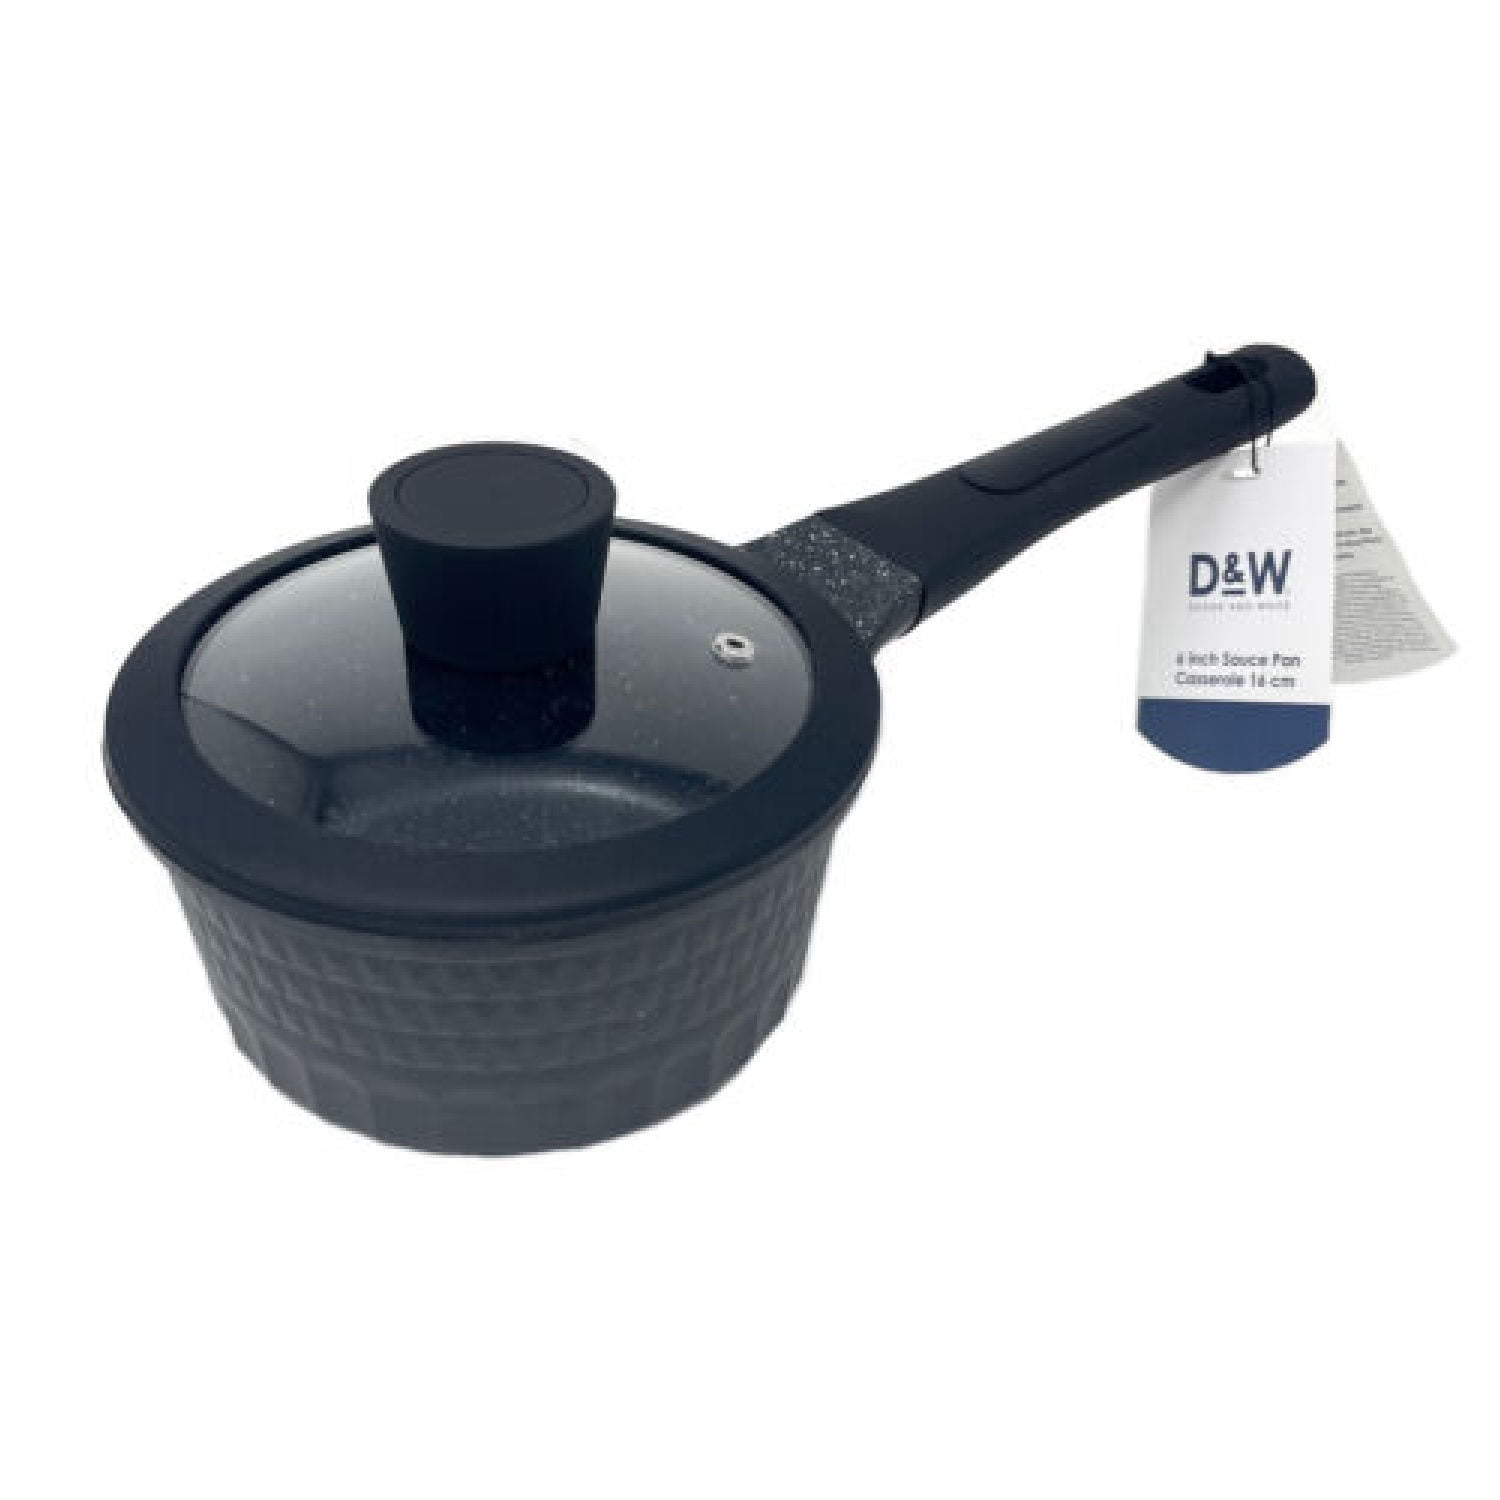 D&W Saucepan Casserole Small Pot 6” Inch Premium NonStick With Lid